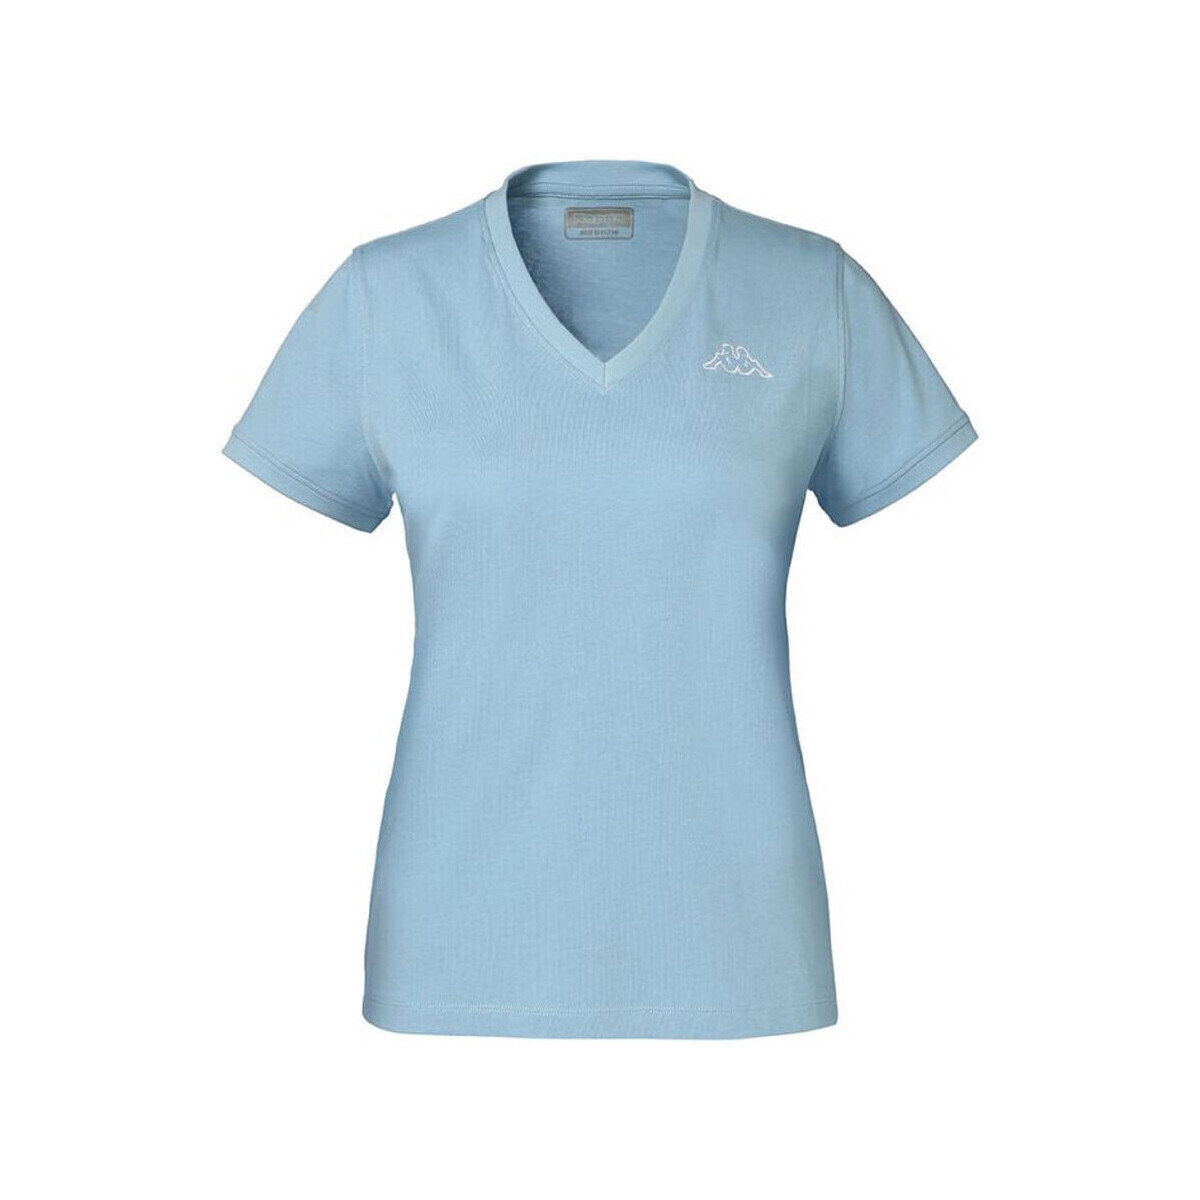 Kleidung Damen T-Shirts & Poloshirts Kappa 303H0P0 Blau